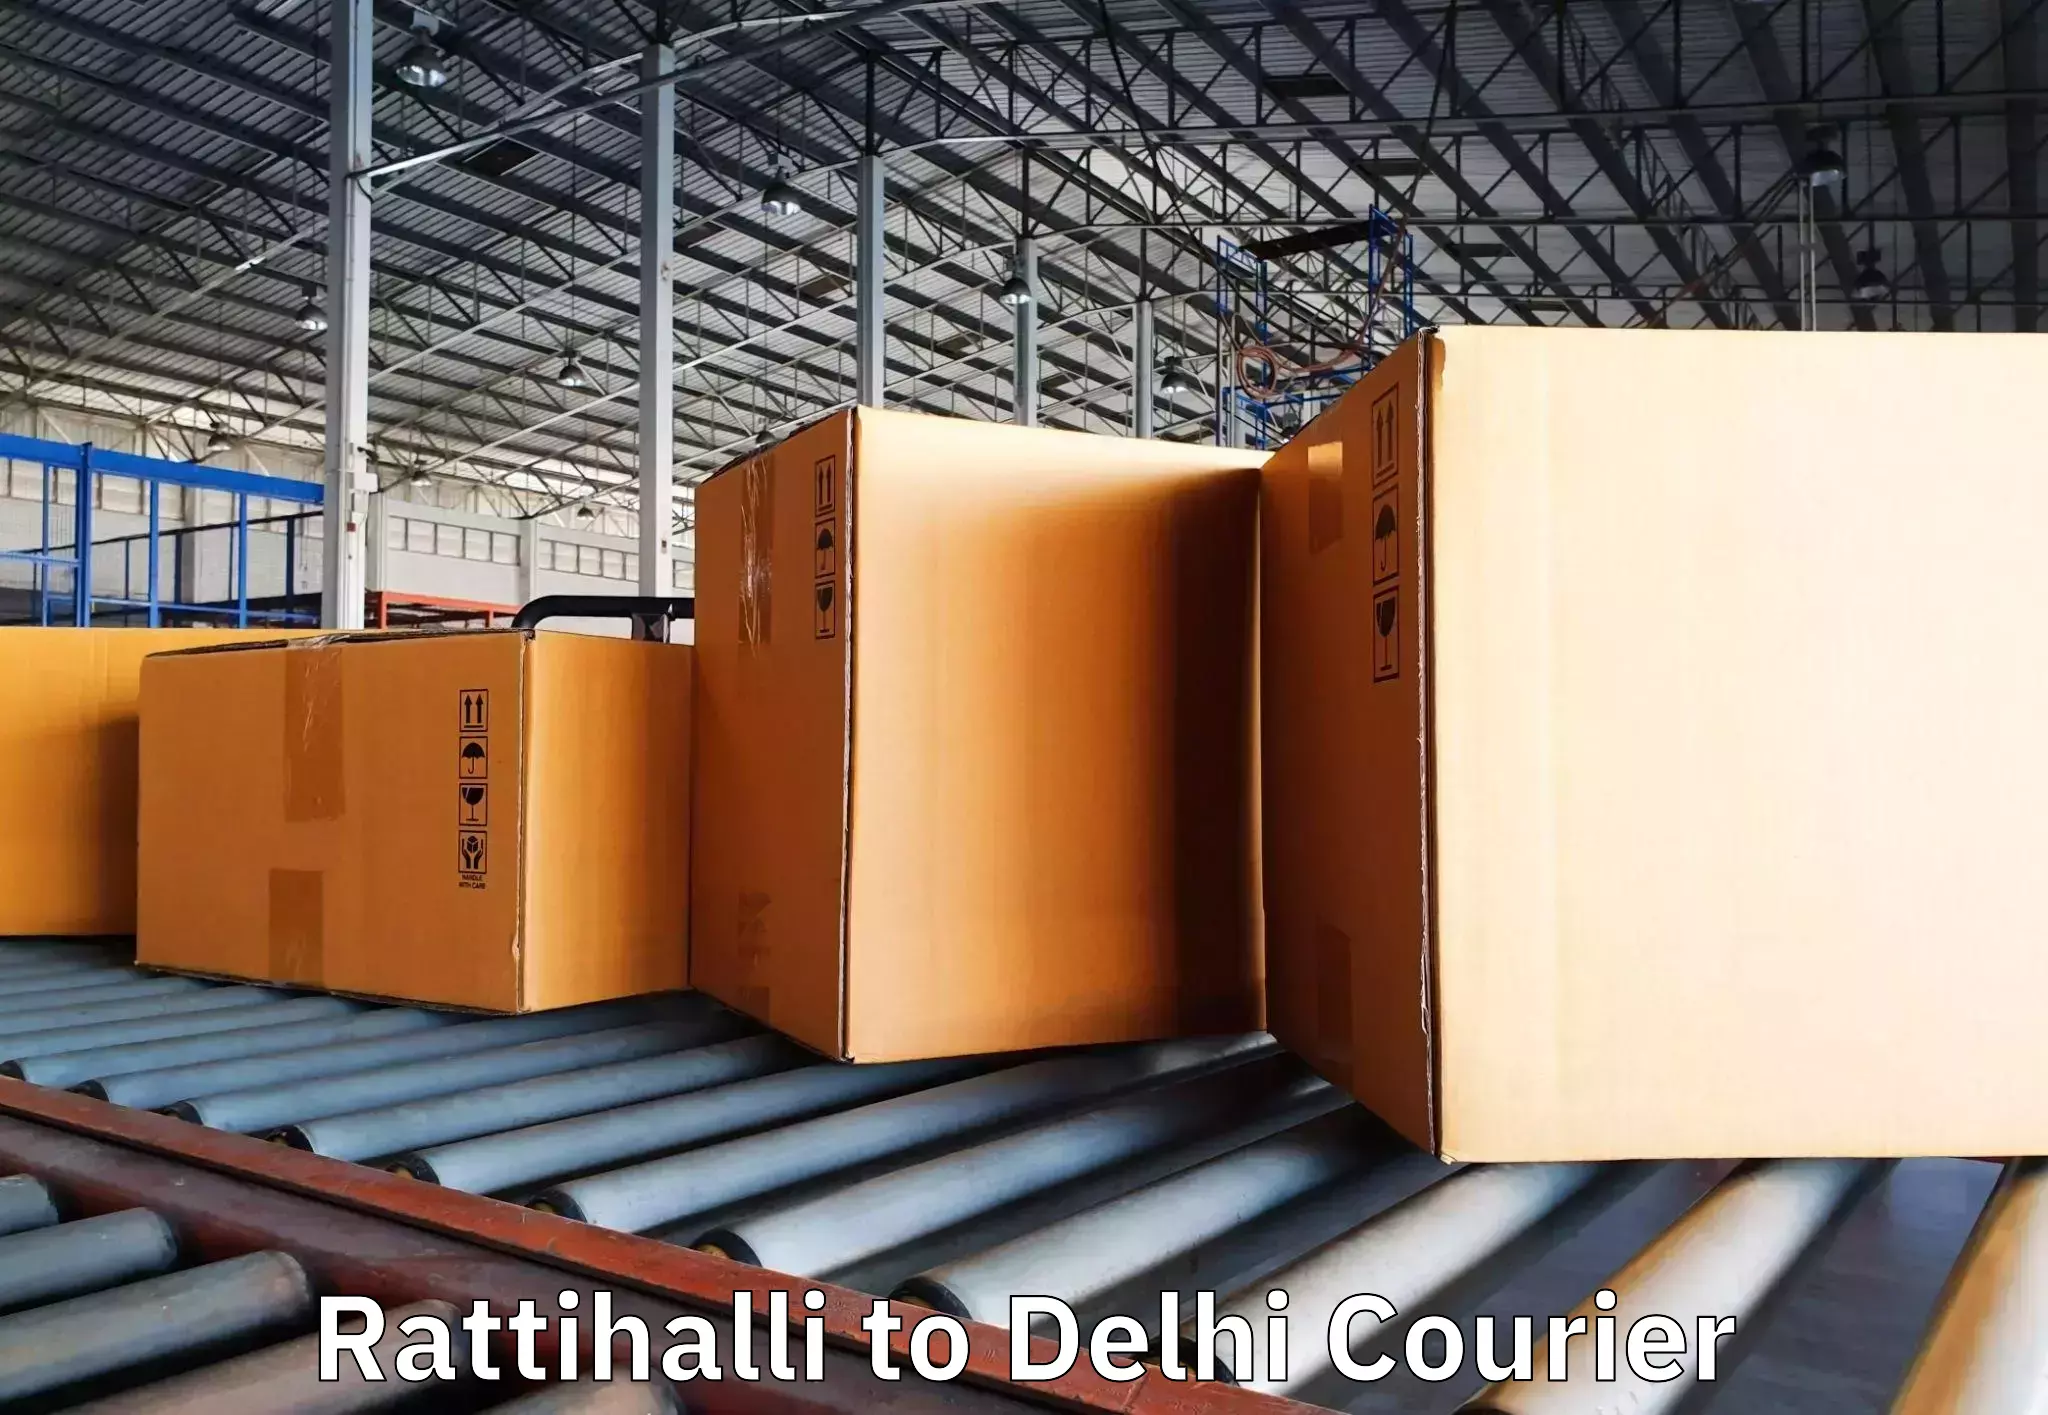 Professional moving company Rattihalli to NCR